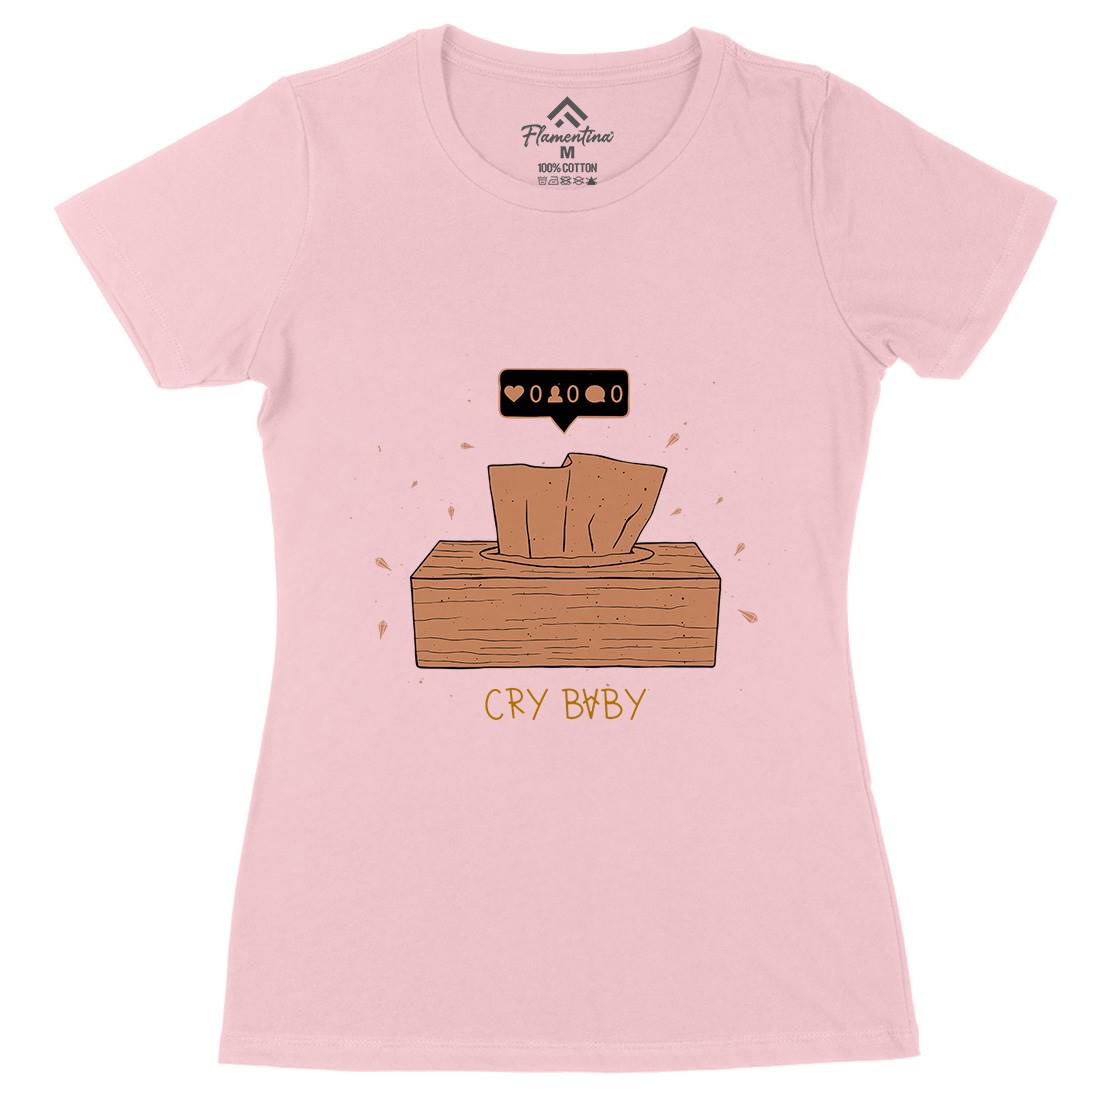 Cry Baby Womens Organic Crew Neck T-Shirt Media D450